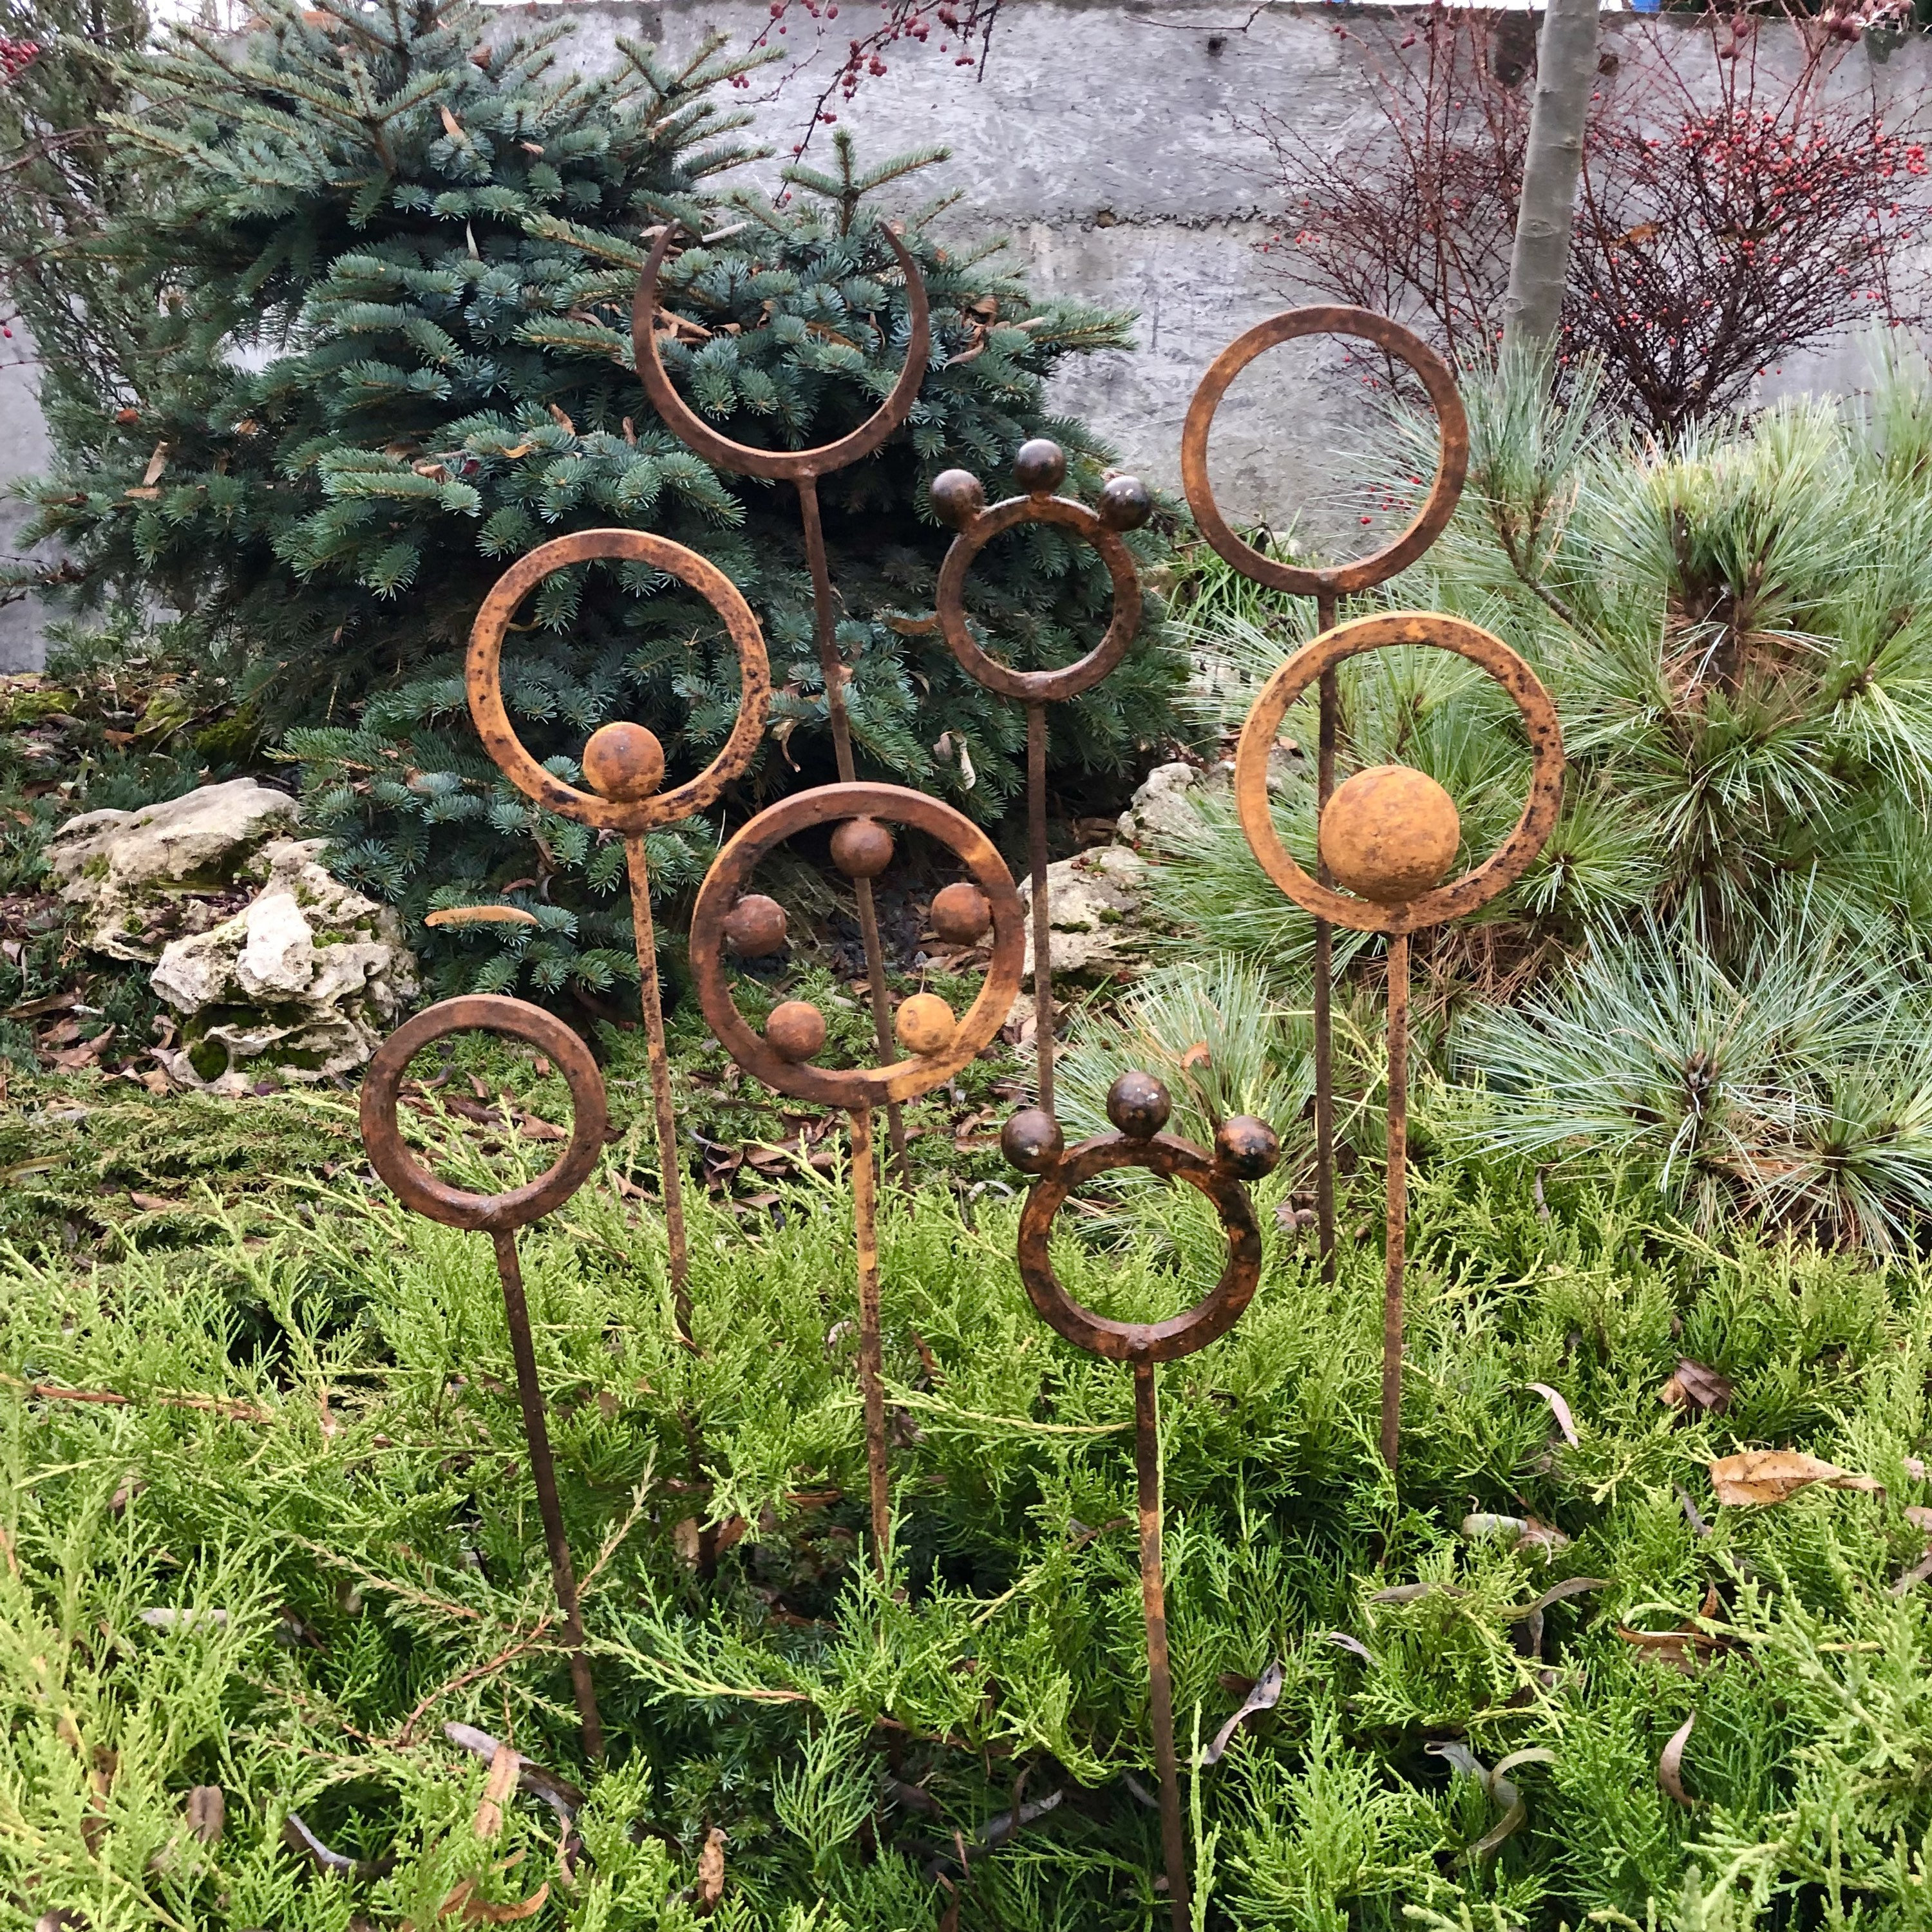 Ensemble de 3 piquets de jardin en métal rouillé, embouts de jardin rouillés,  décor de jardin